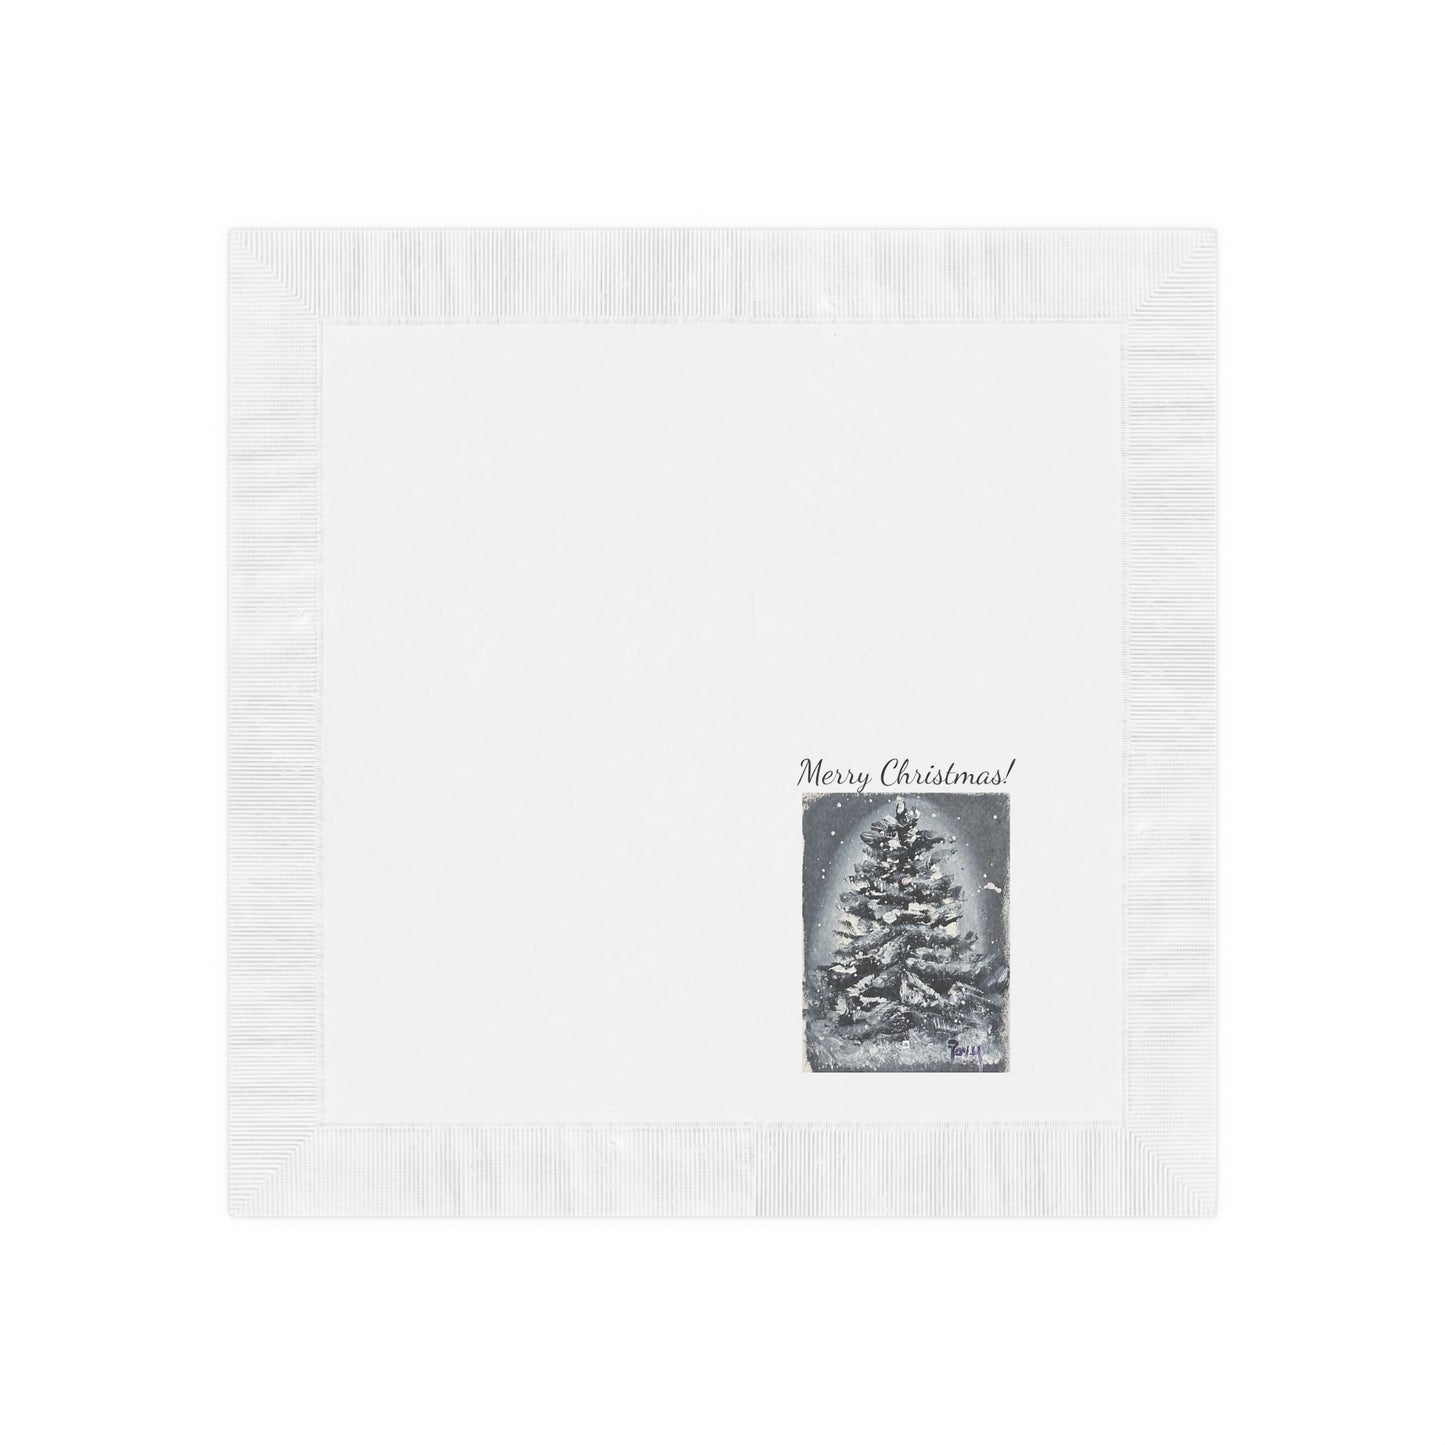 Merry Christmas!  Tree-White Coined Napkins